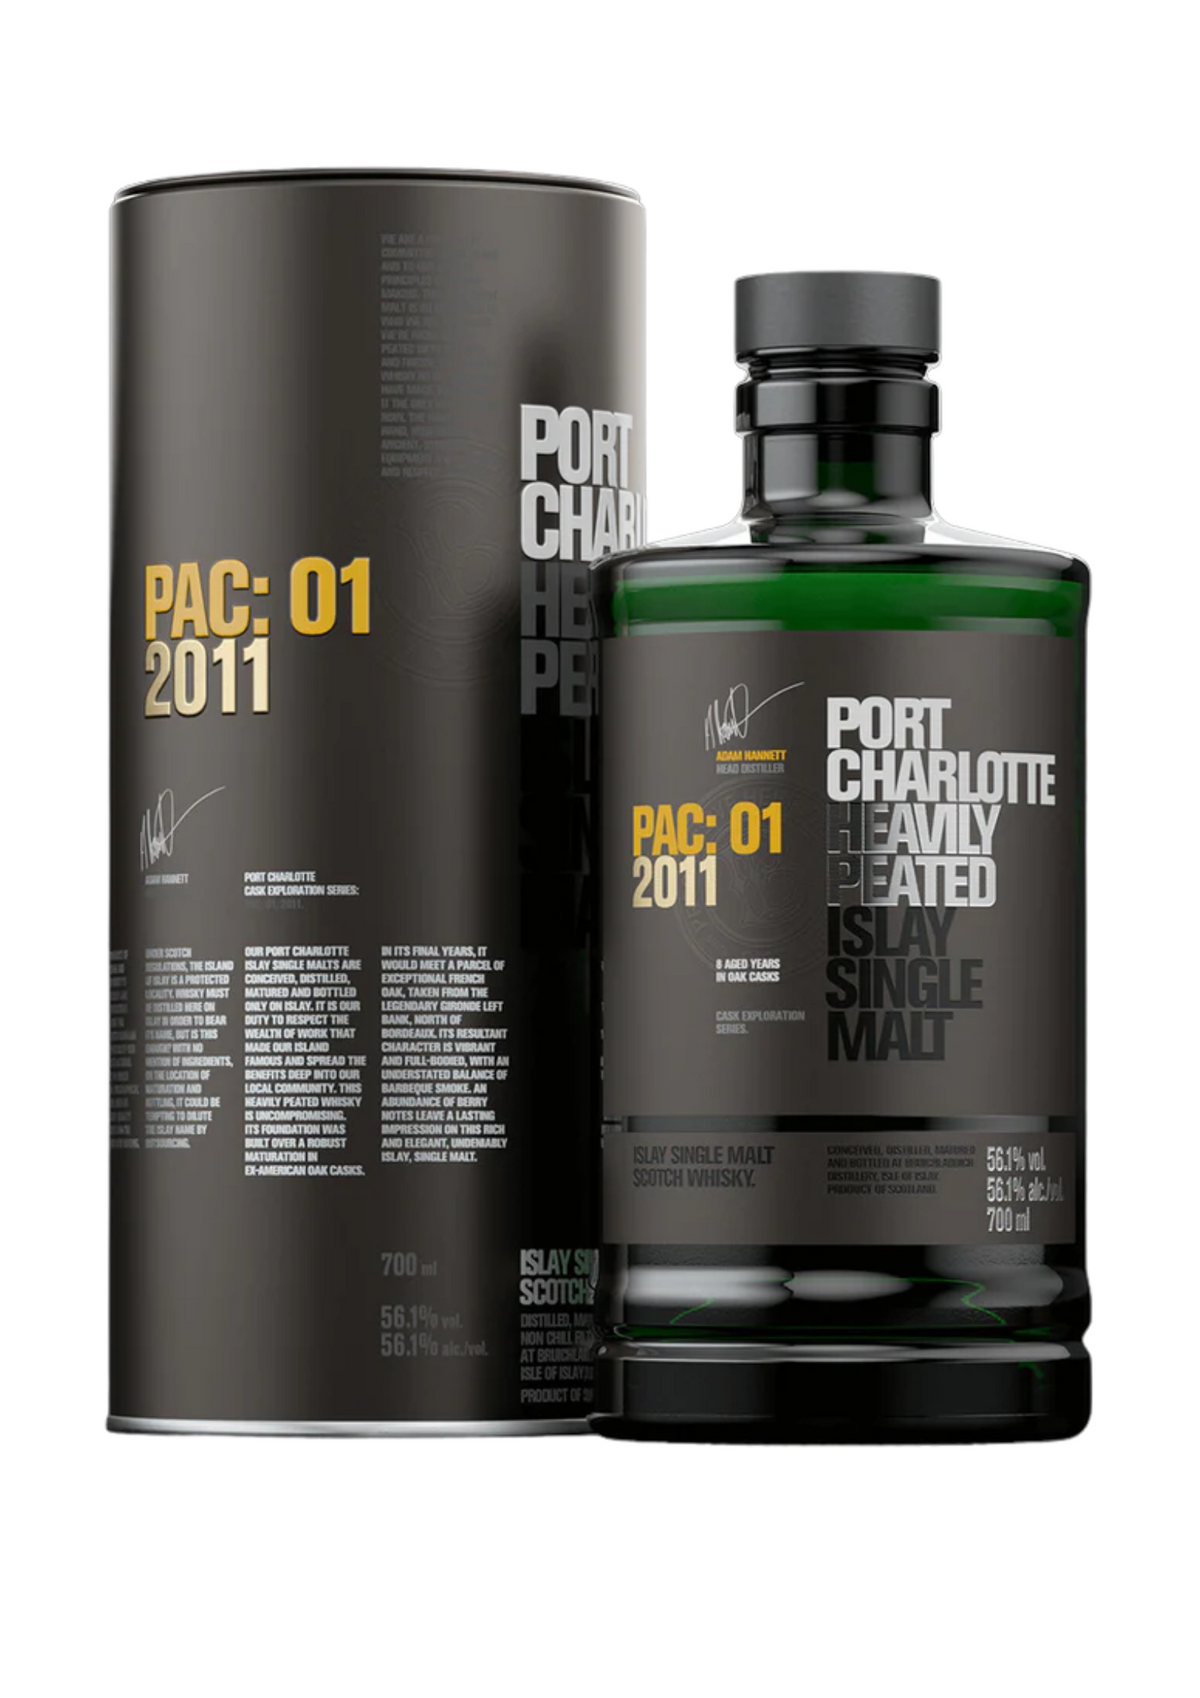 Bottle of Port Charlotte PAC: 01, 2011, Islay Single Malt Whisky, 56.1% - The Spirits Room